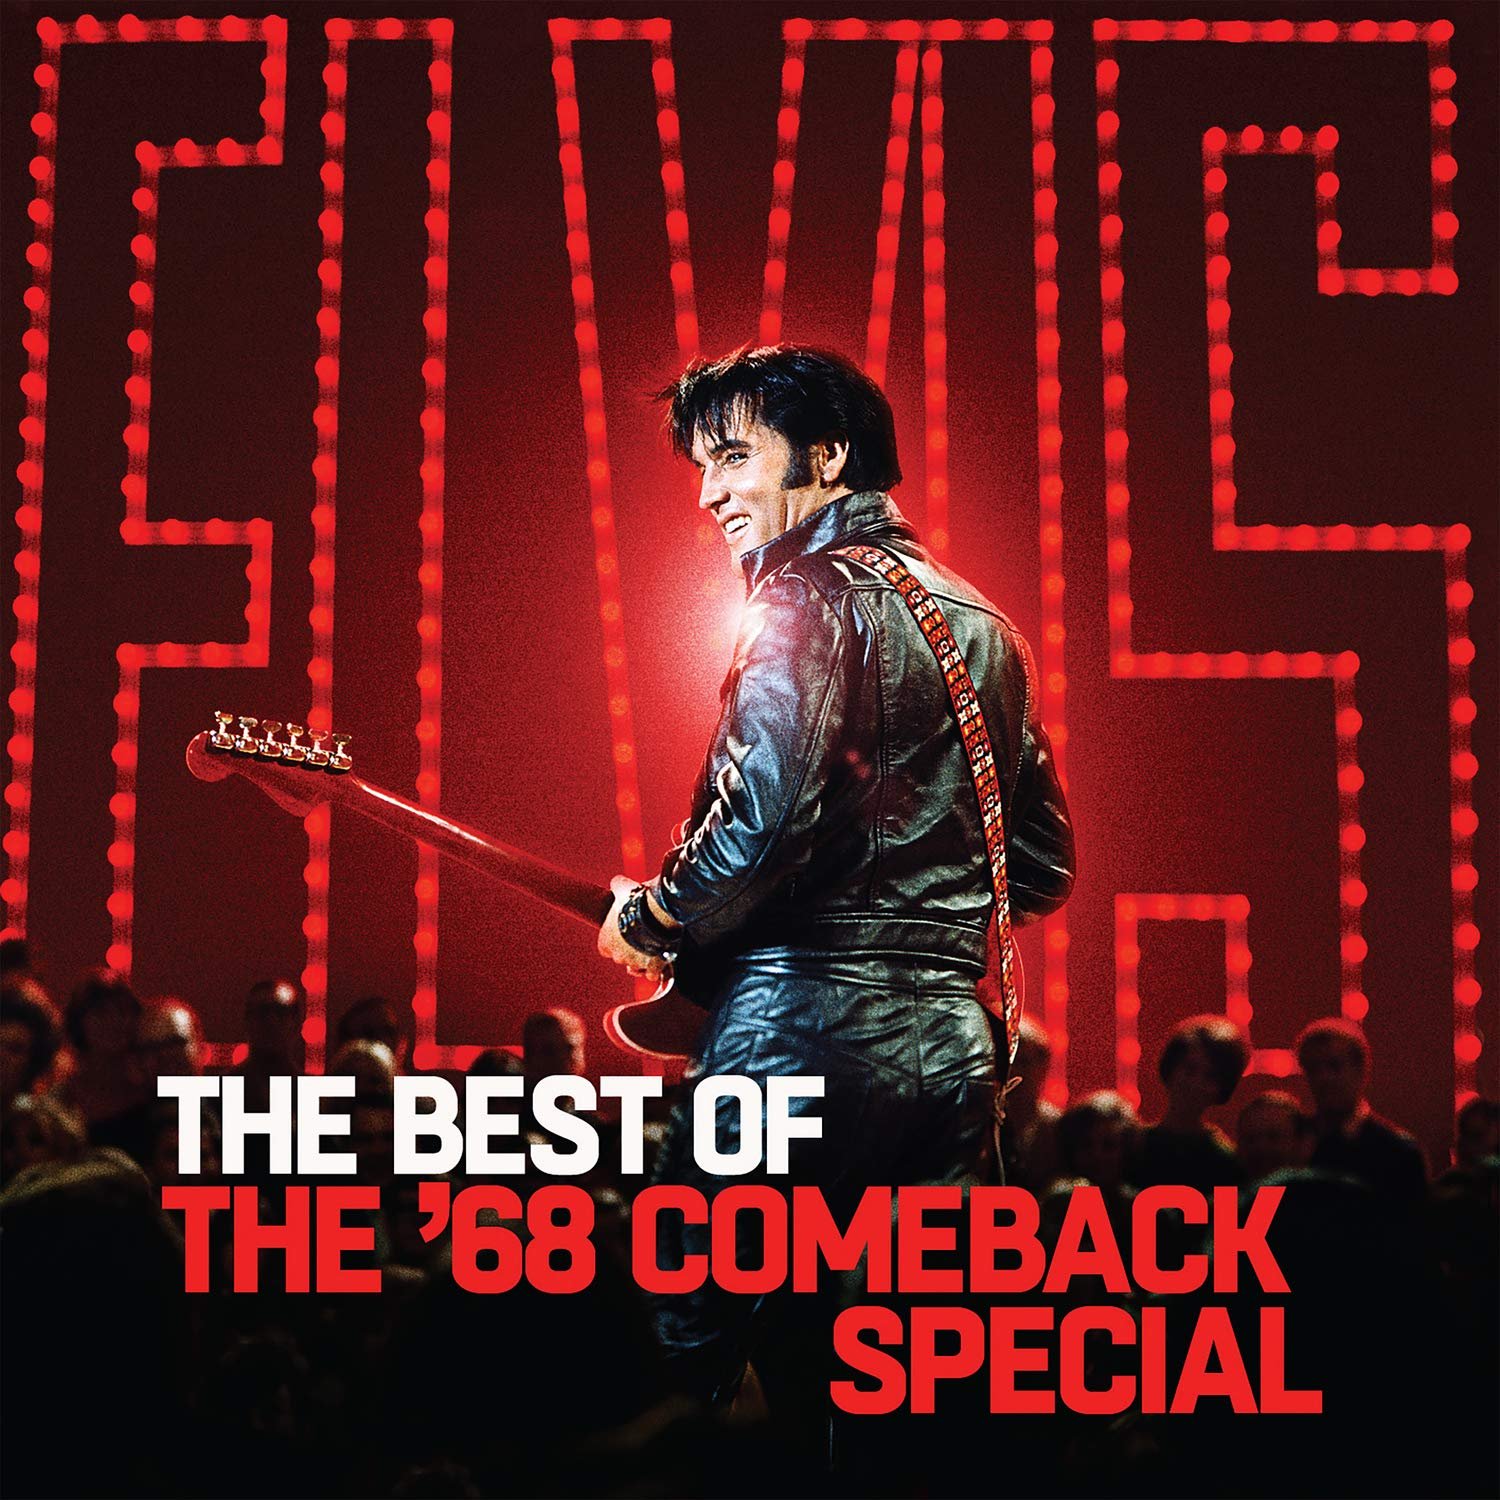 Back special. Элвис Пресли 68 Comeback. Elvis Presley 68 Comeback Special. Elvis Presley best. Elvis Presley-Heartbreak Hotel-1968-Comeback Special.